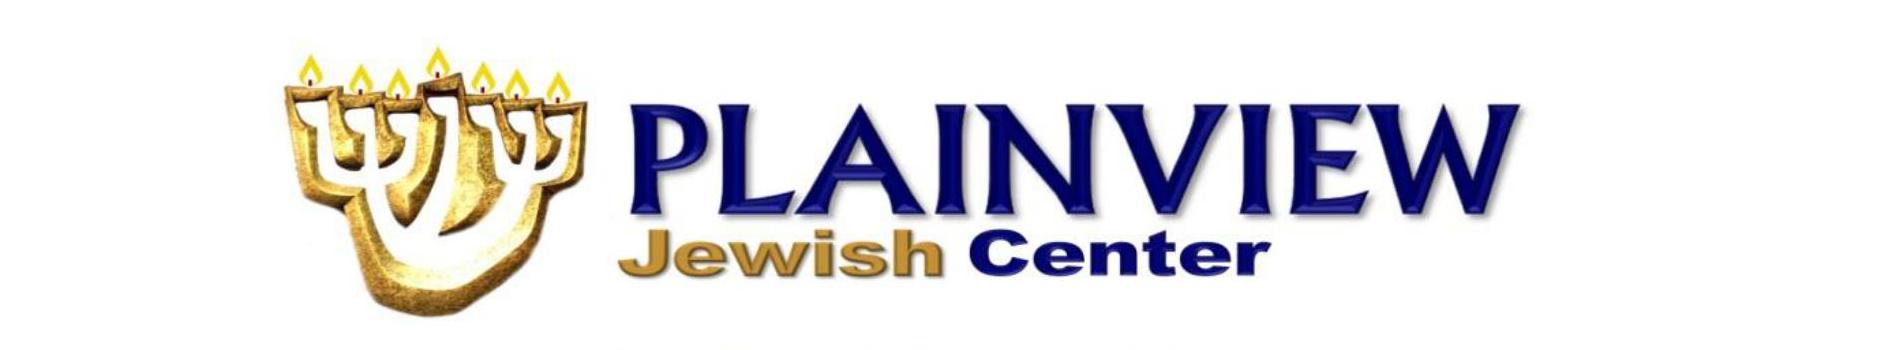 Plainview Jewish Center